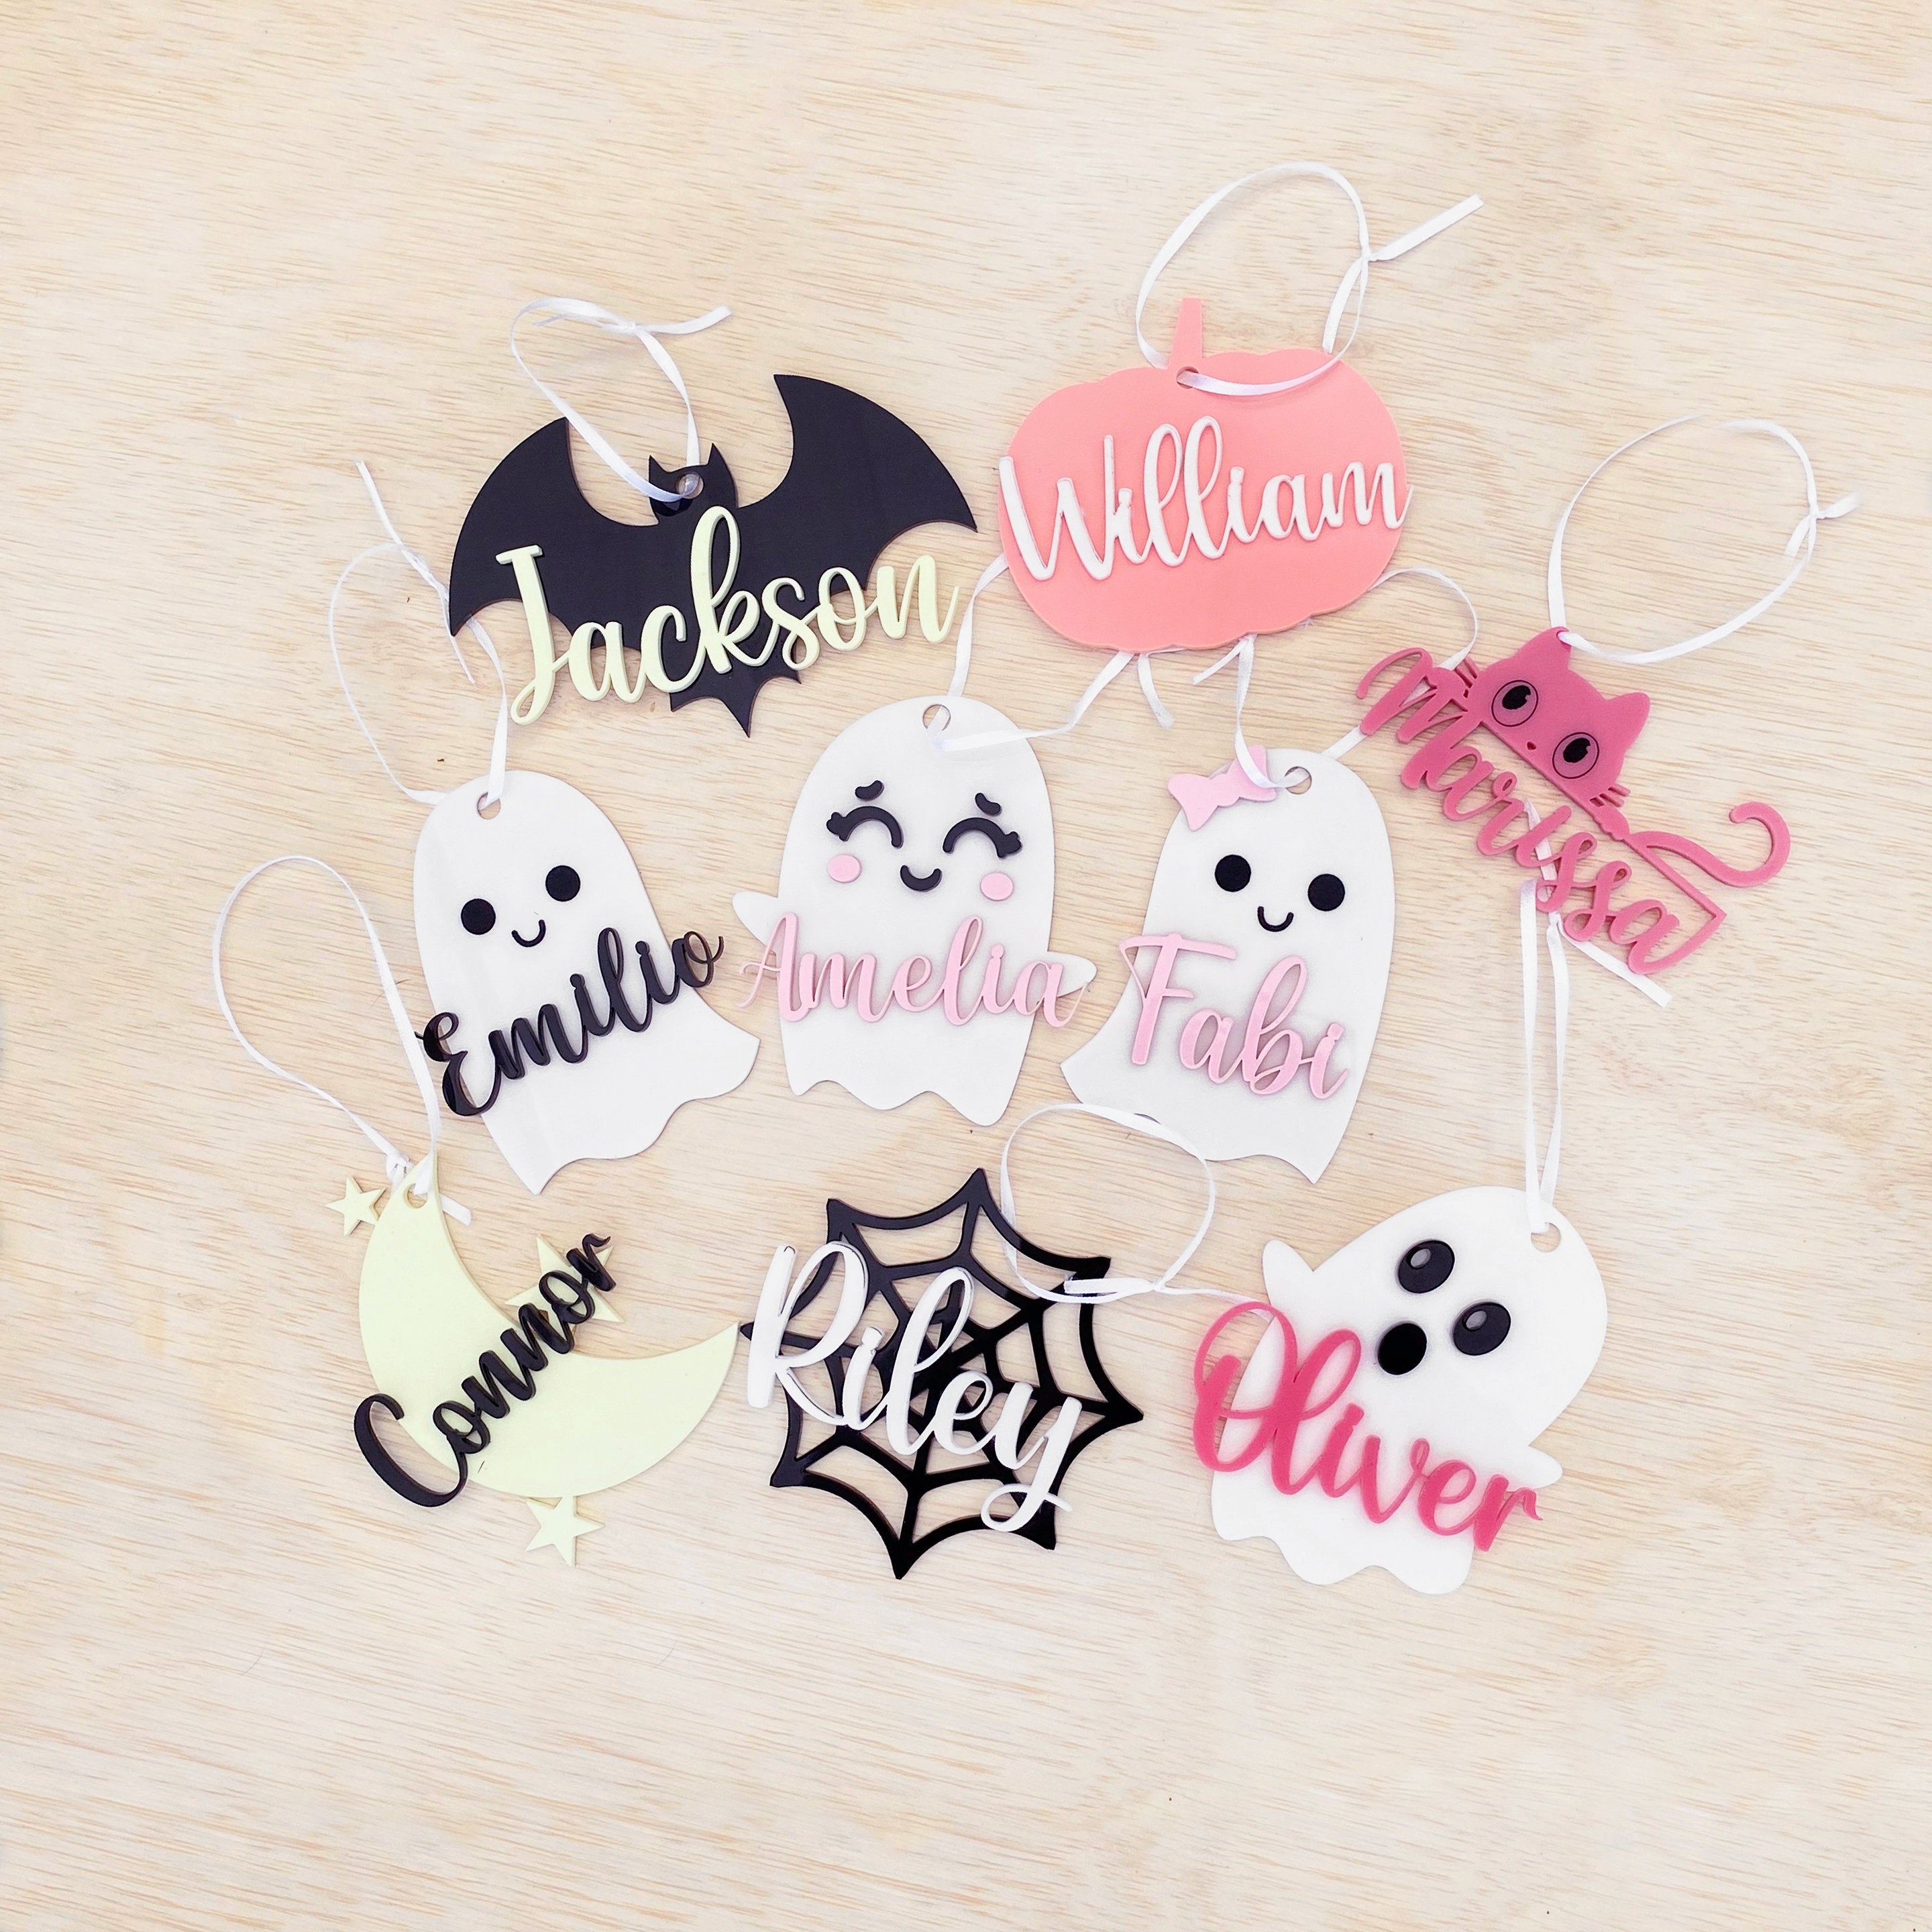 Custom Made Halloween Trick or Treat Bag, Halloween Gifts, Halloween Basket, Personalized Halloween Trick or Treating Bag